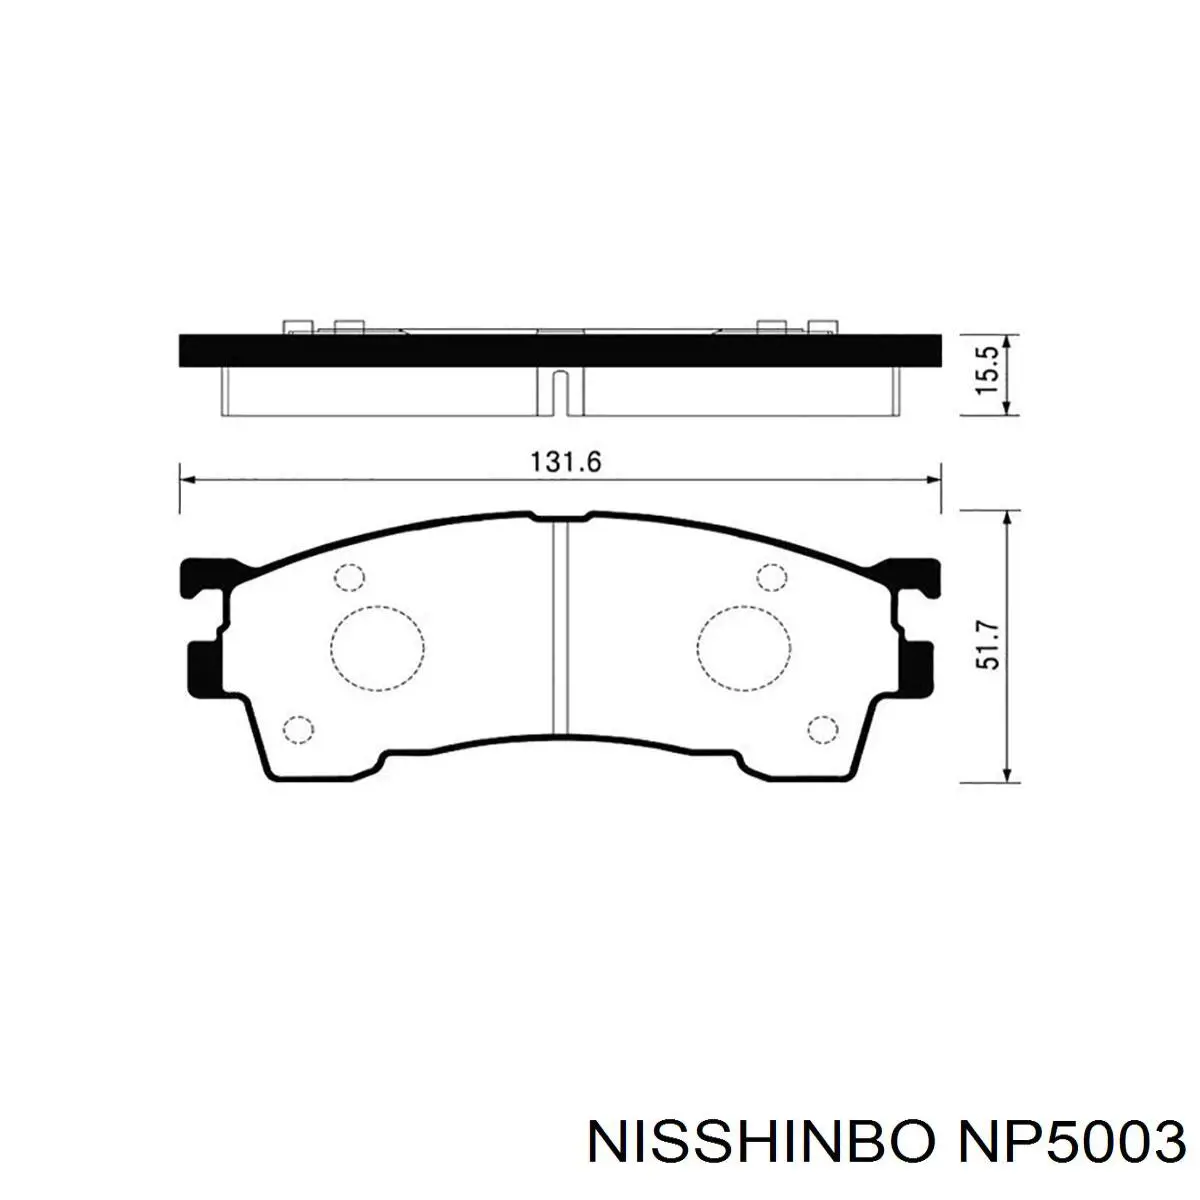 NP5003 Nisshinbo pastillas de freno delanteras